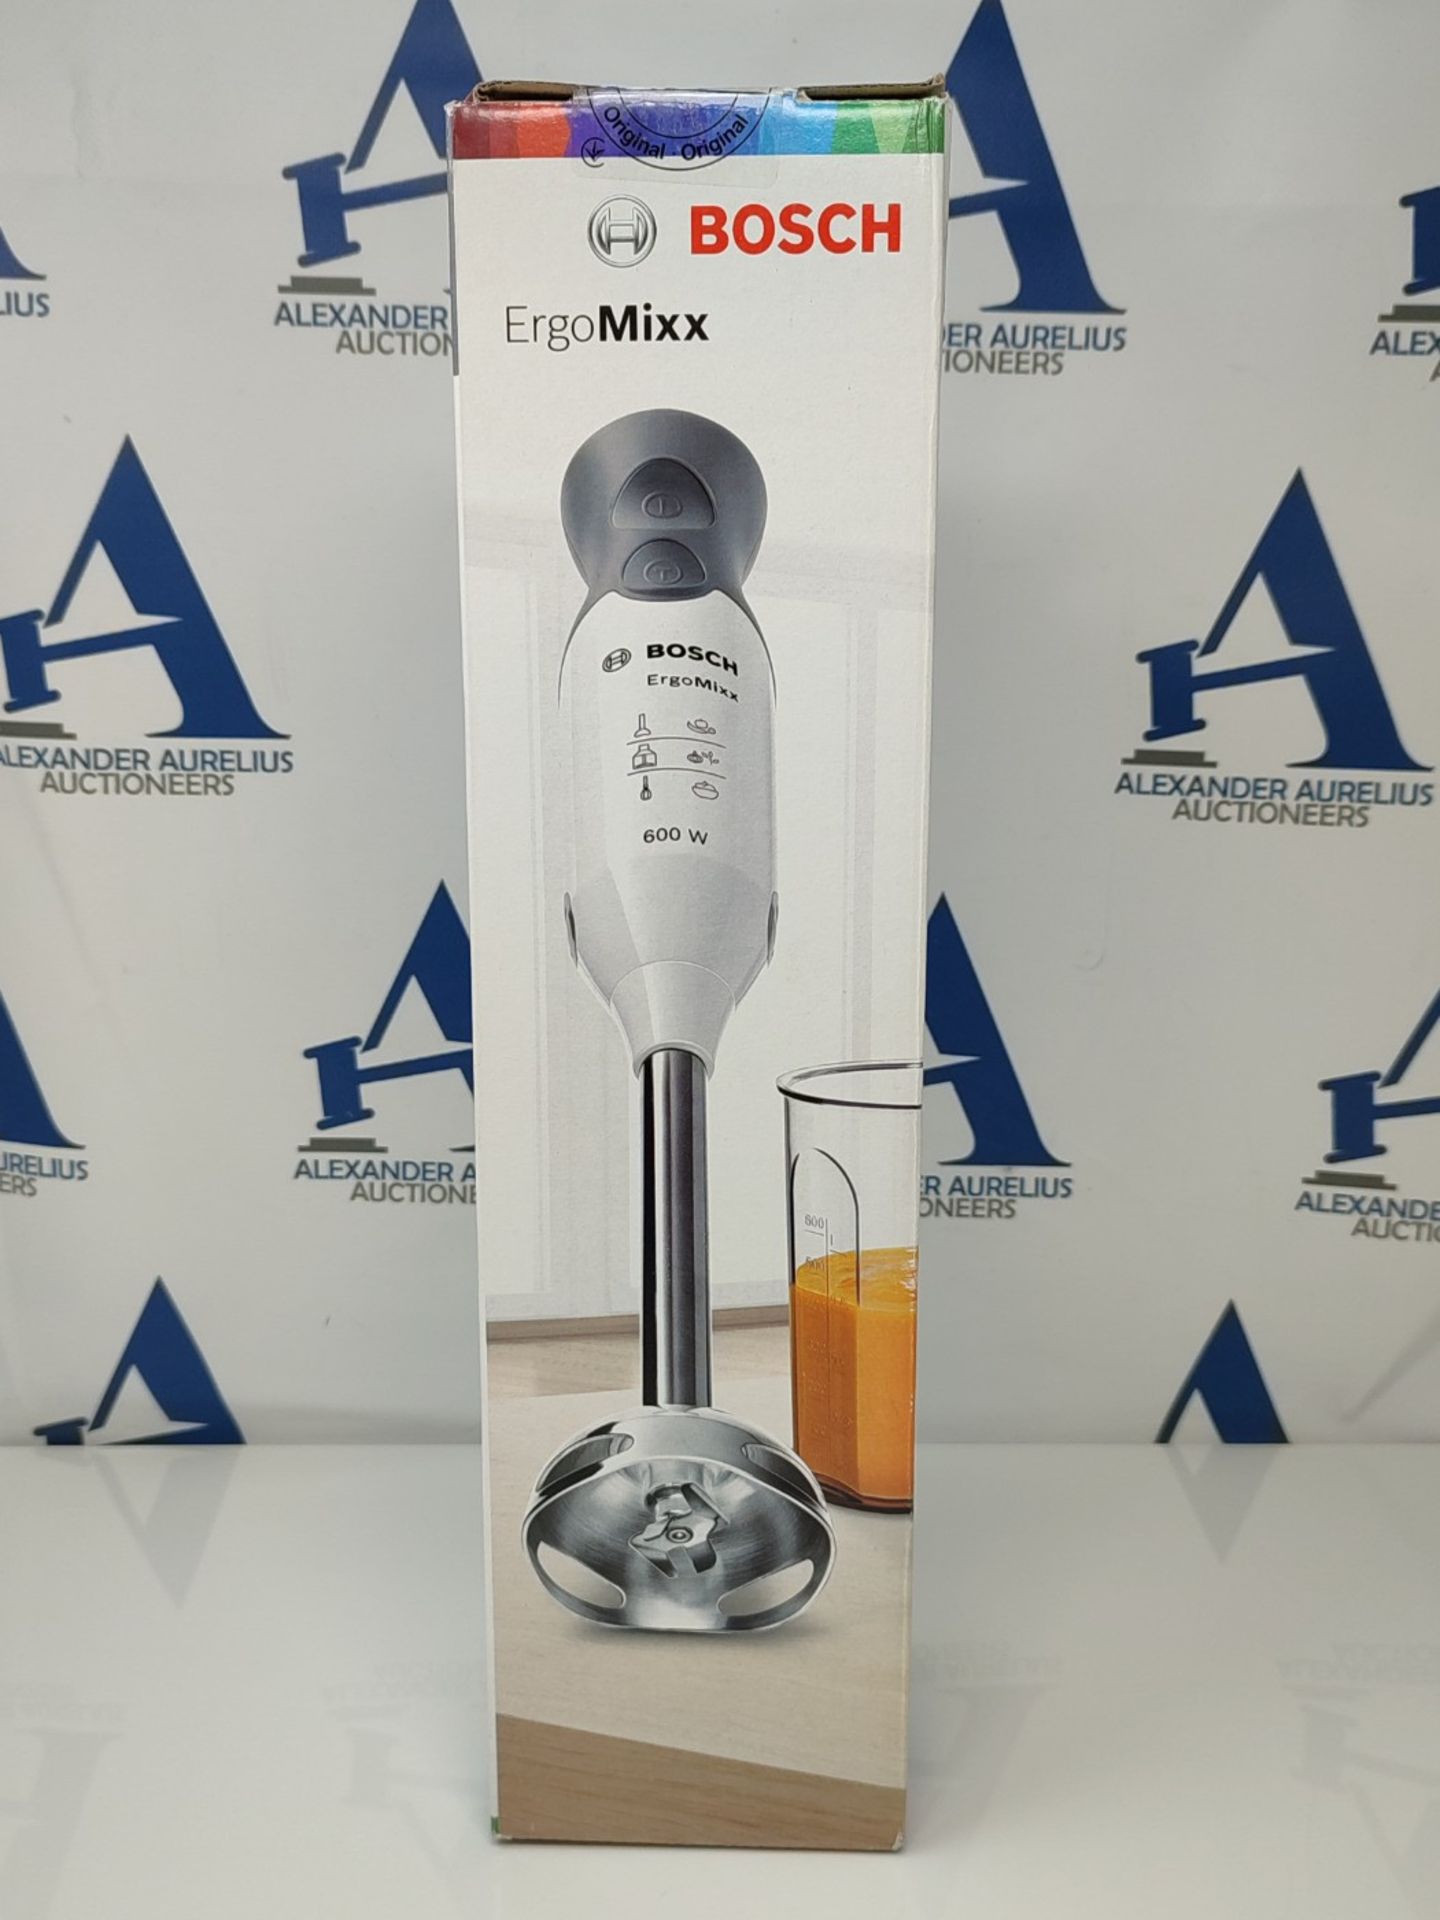 Bosch MSM66110 ErgoMixx Mixeur-Plongeur 600 W, Blanc/Gris - Image 2 of 3